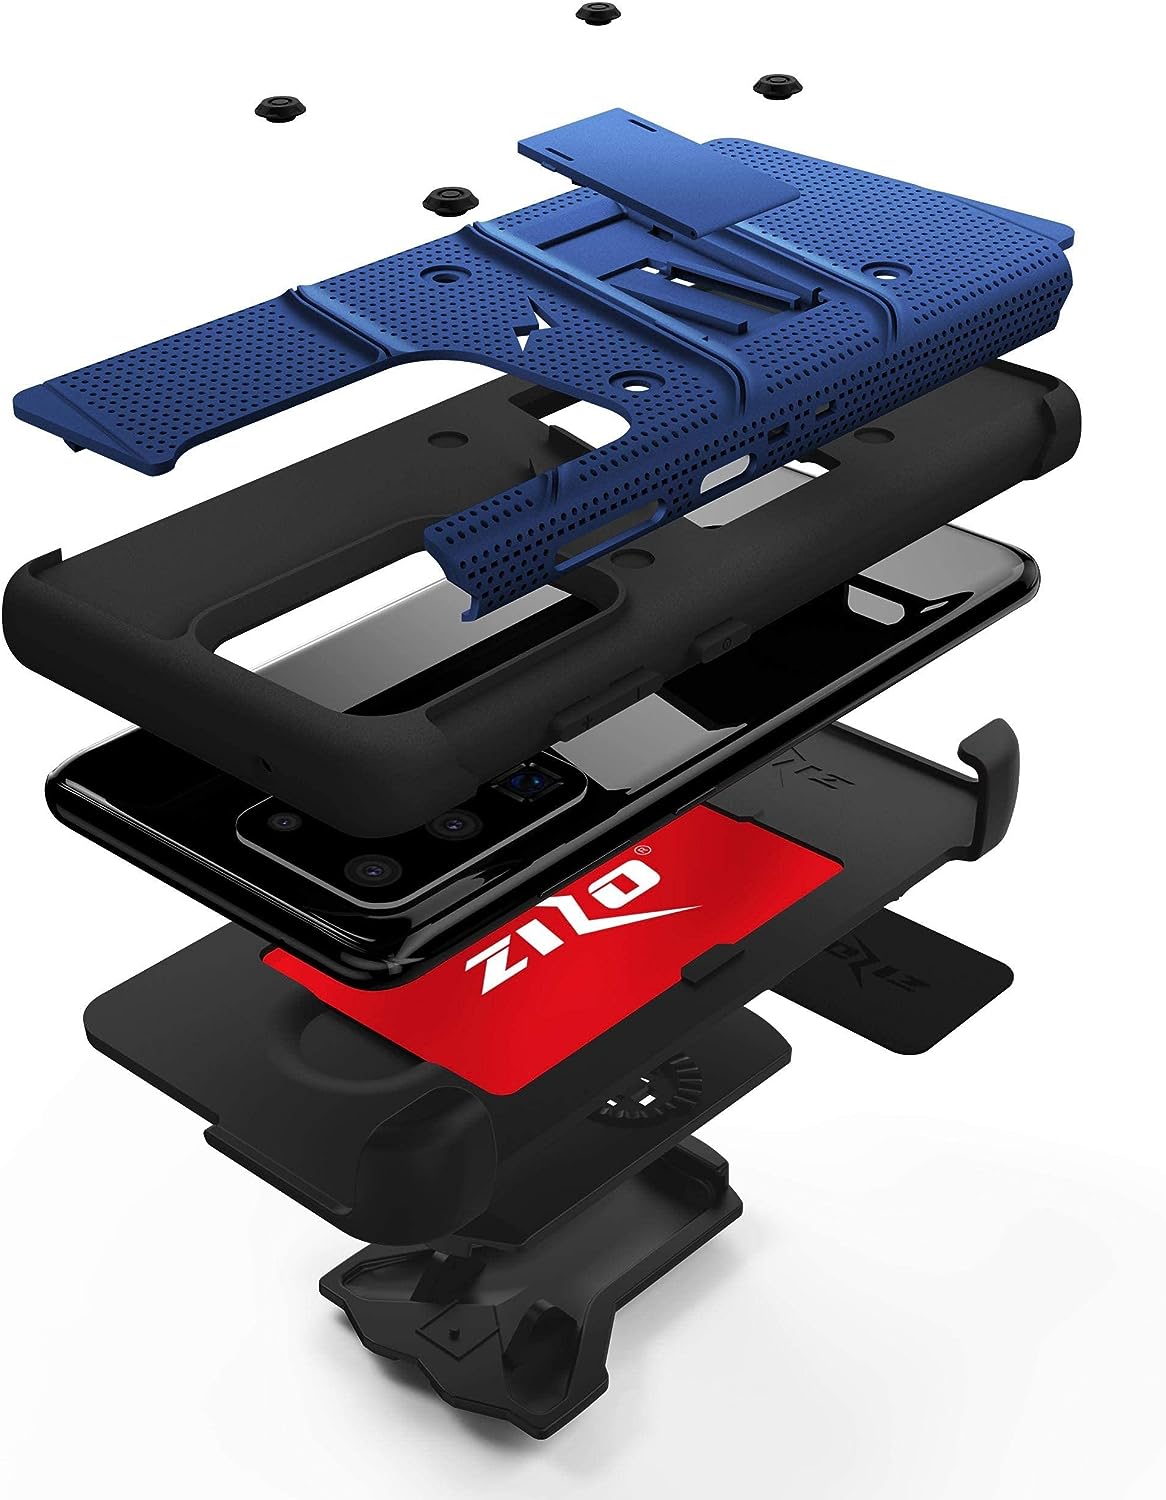 ZIZO Bolt Samsung Galaxy S20 Ultra Holster Case with Kickstand Clip & Lanyard (3 Colors)